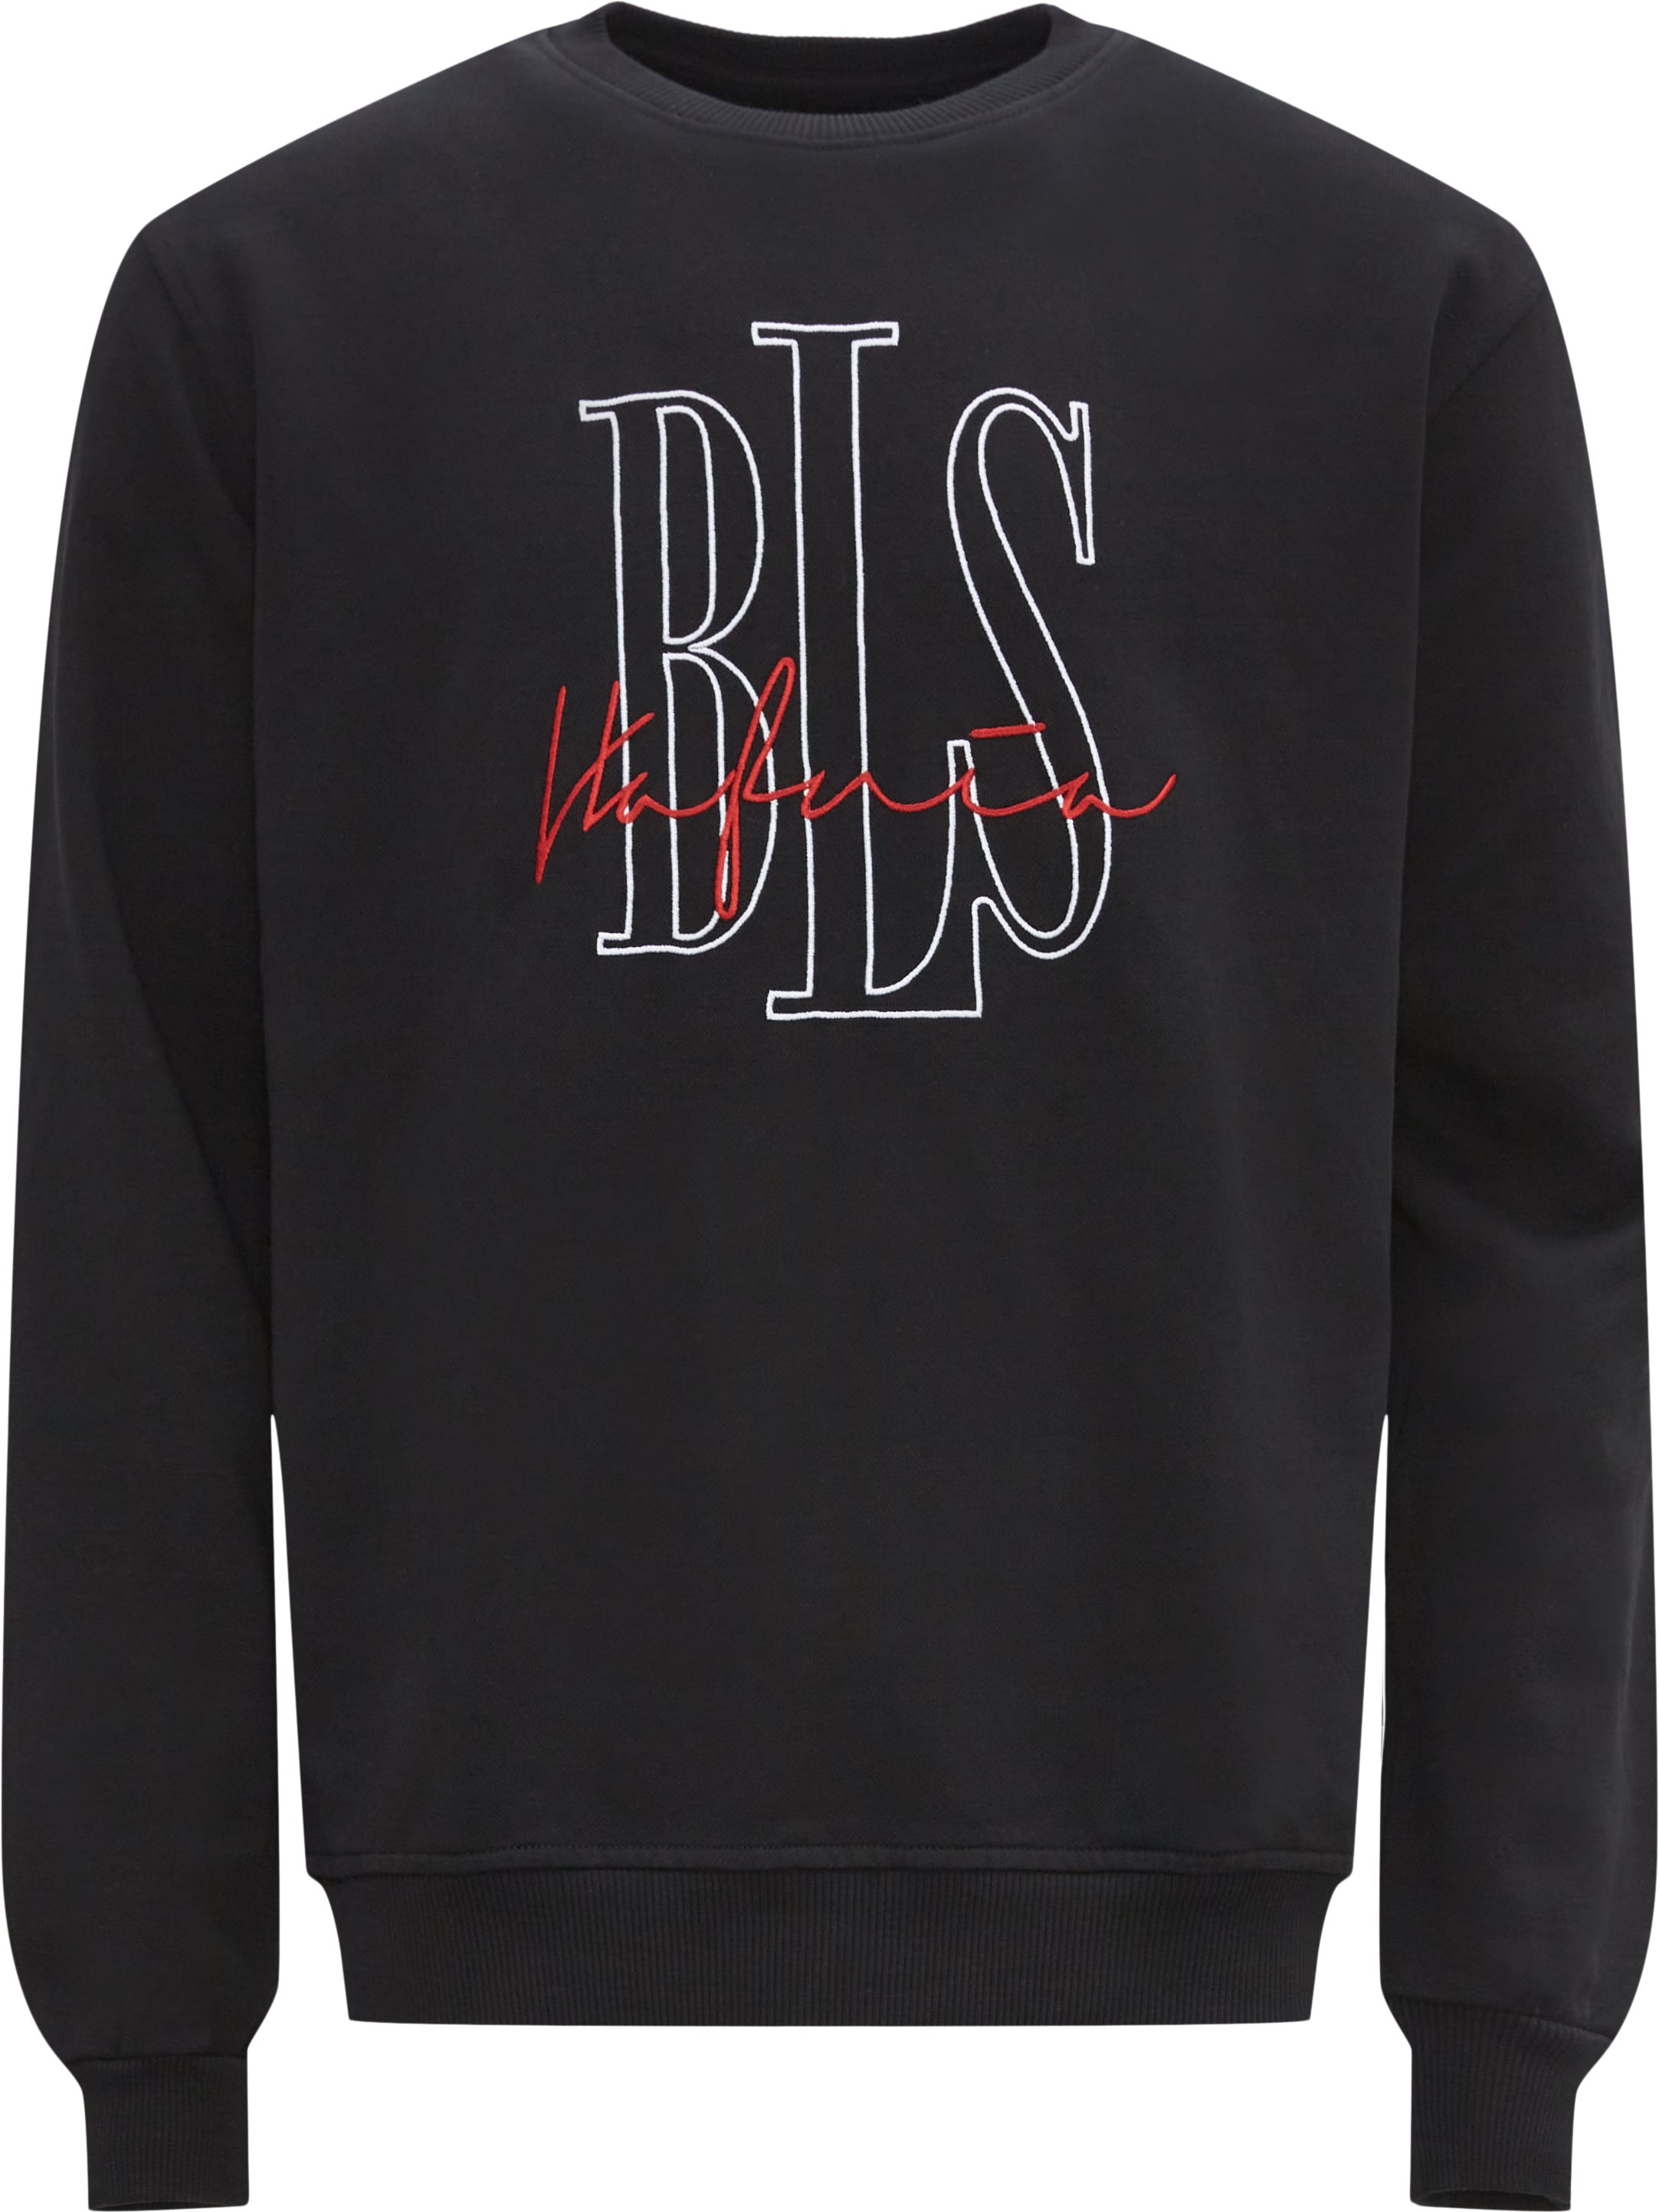 BLS Sweatshirts OUTLINE LOGO-2 CREWNECK Black